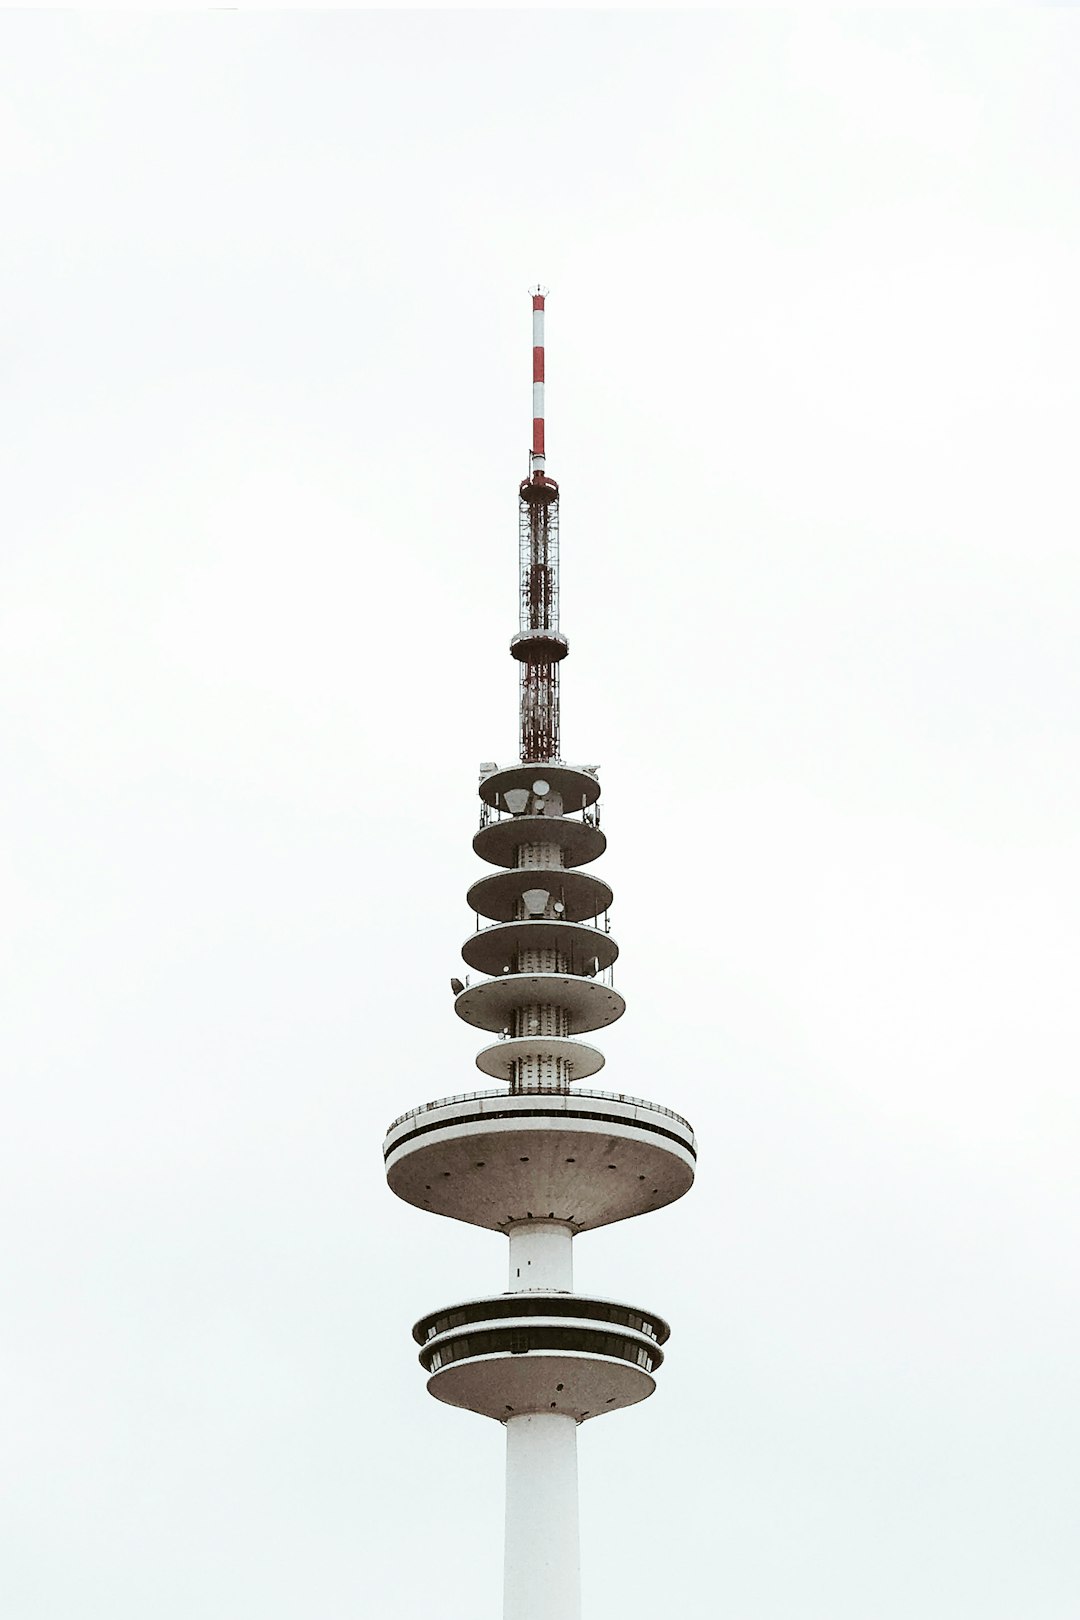 Travel Guide of Heinrich-Hertz-Turm by Influencers | Hatlas Travel